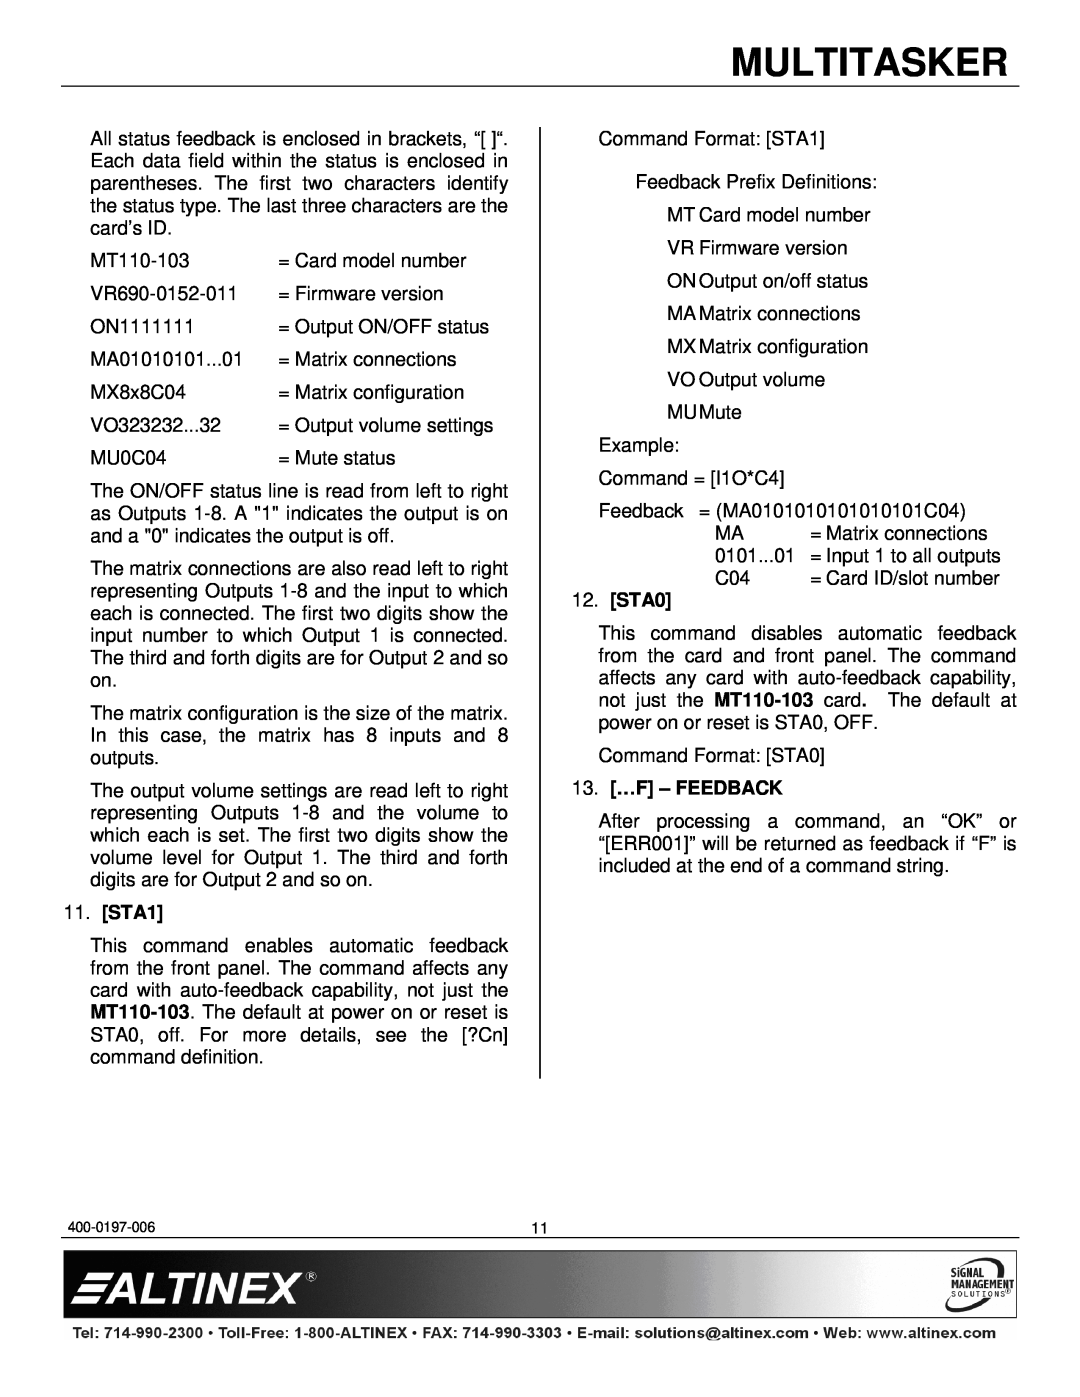 Altinex MT110-103 manual STA1, STA0, 13. …F - FEEDBACK, Multitasker 